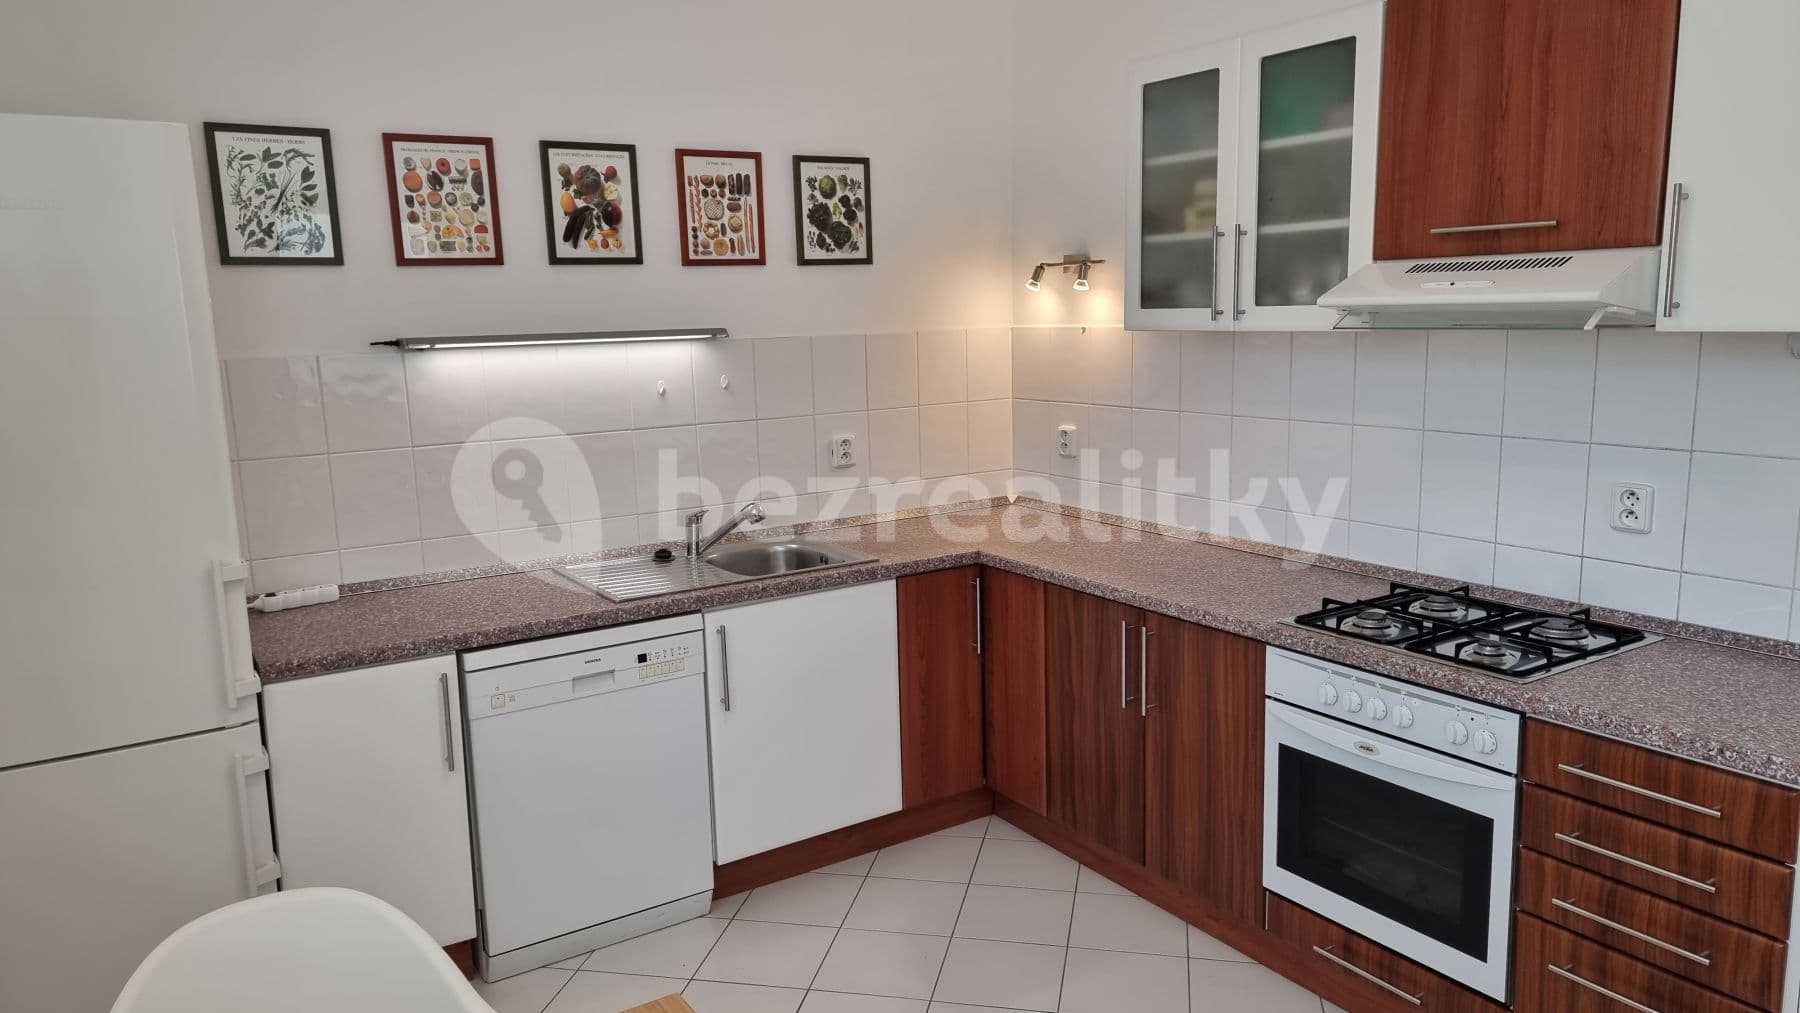 2 bedroom flat to rent, 68 m², Ke Koh-i-nooru, Prague, Prague